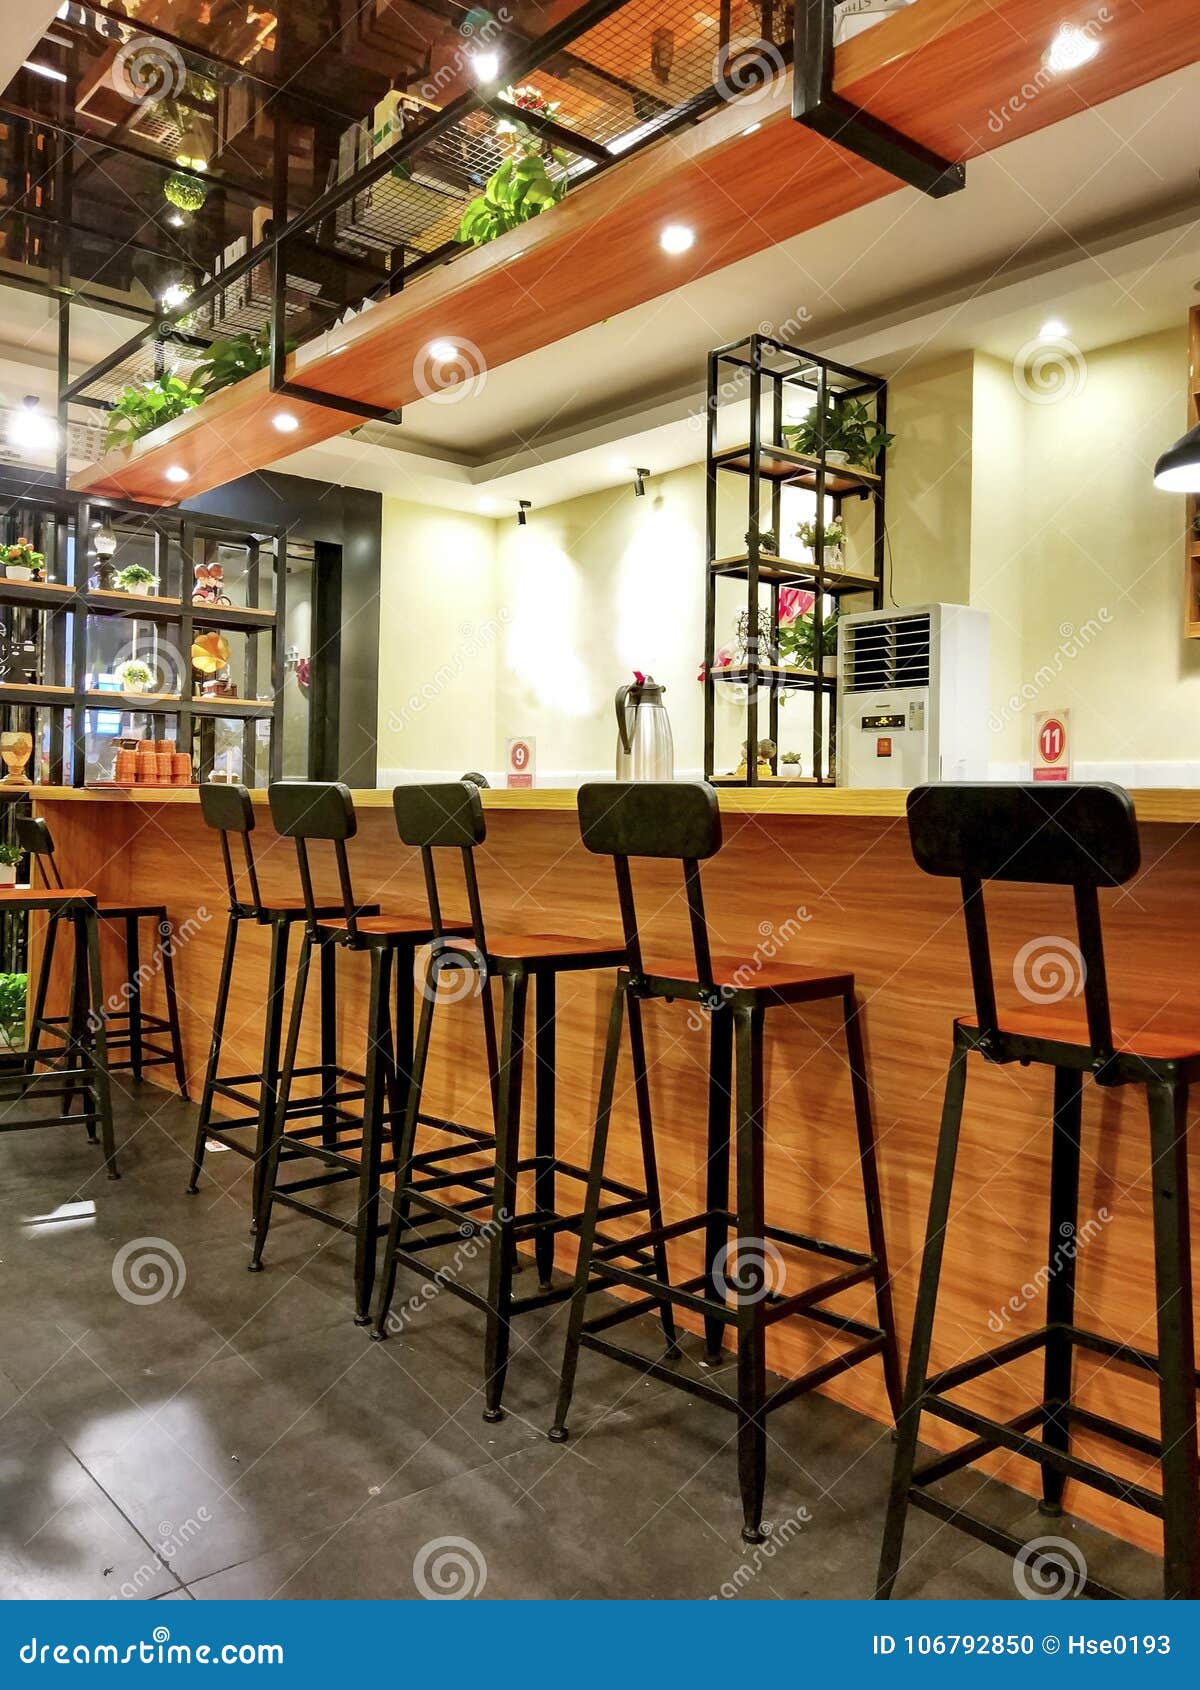 bar interior with empty stools